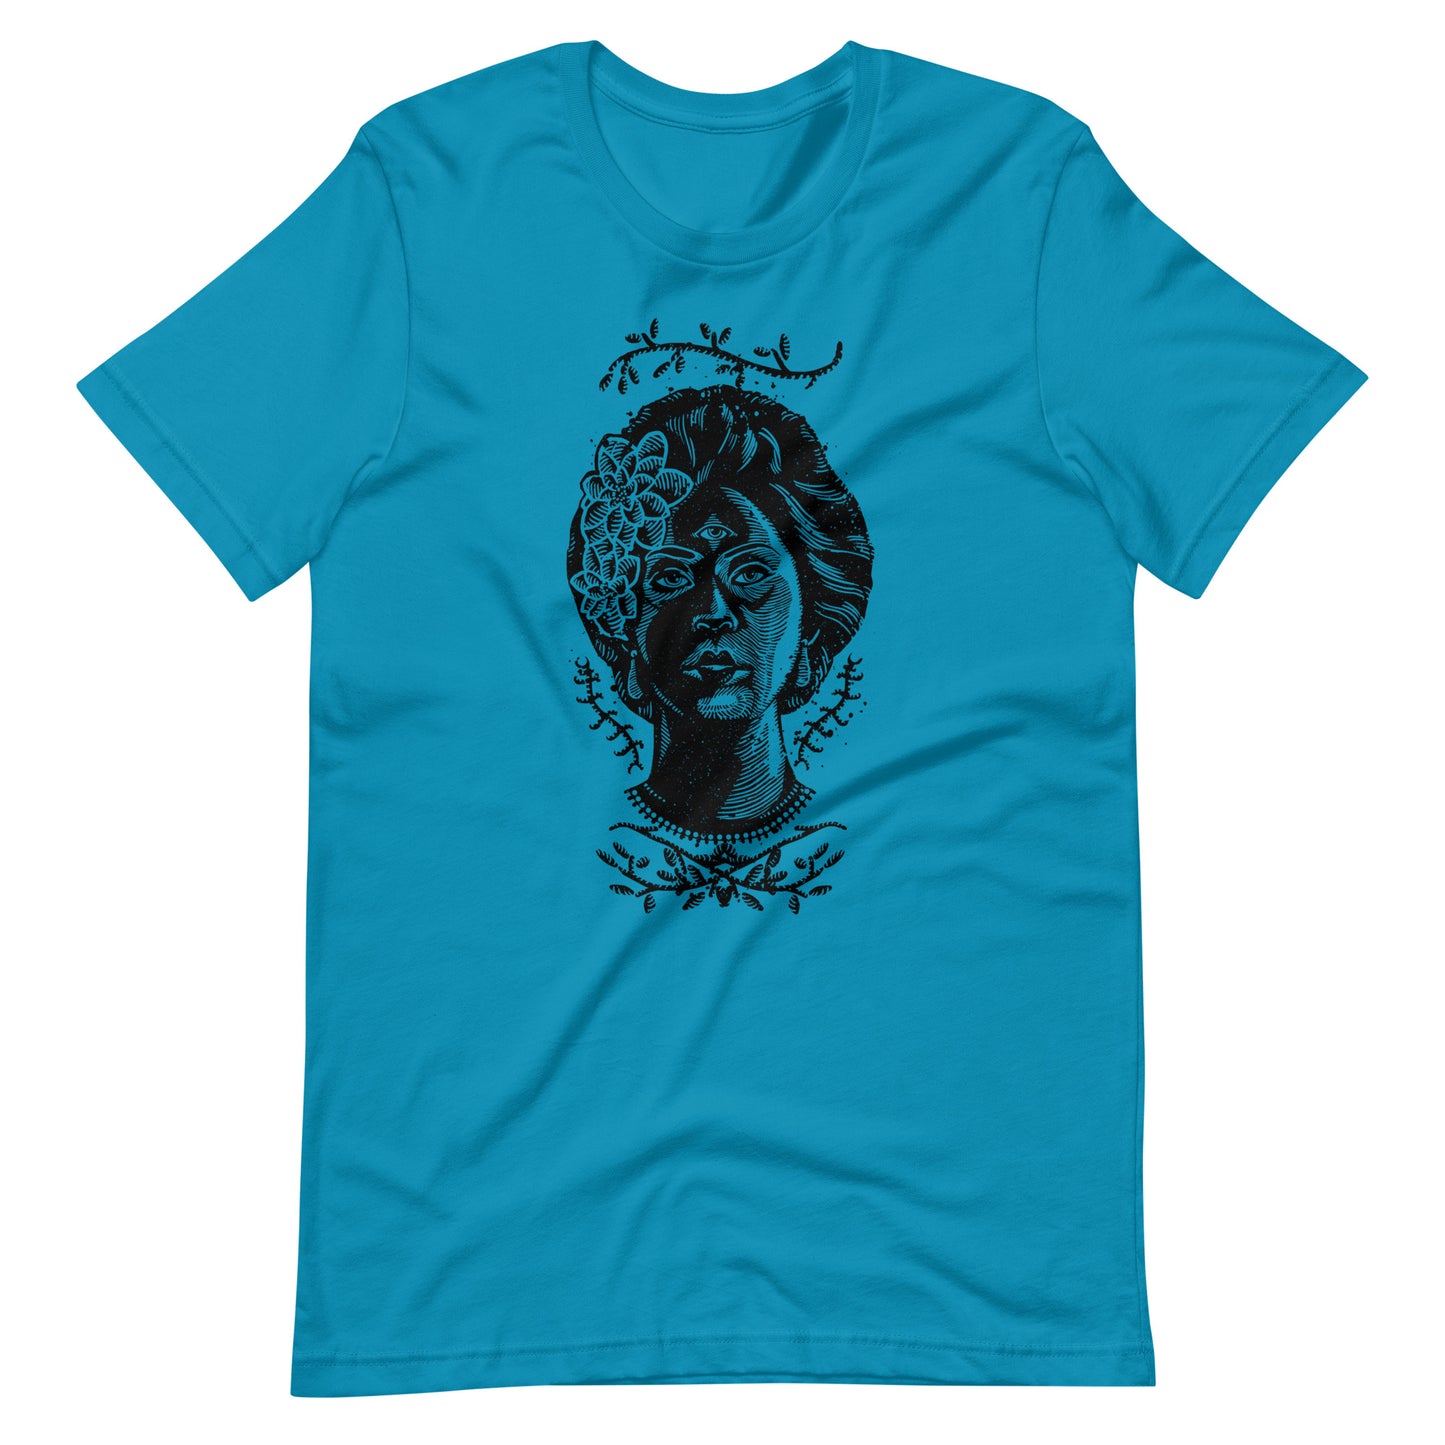 Girl Eyes Black - Men's t-shirt - Aqua Front